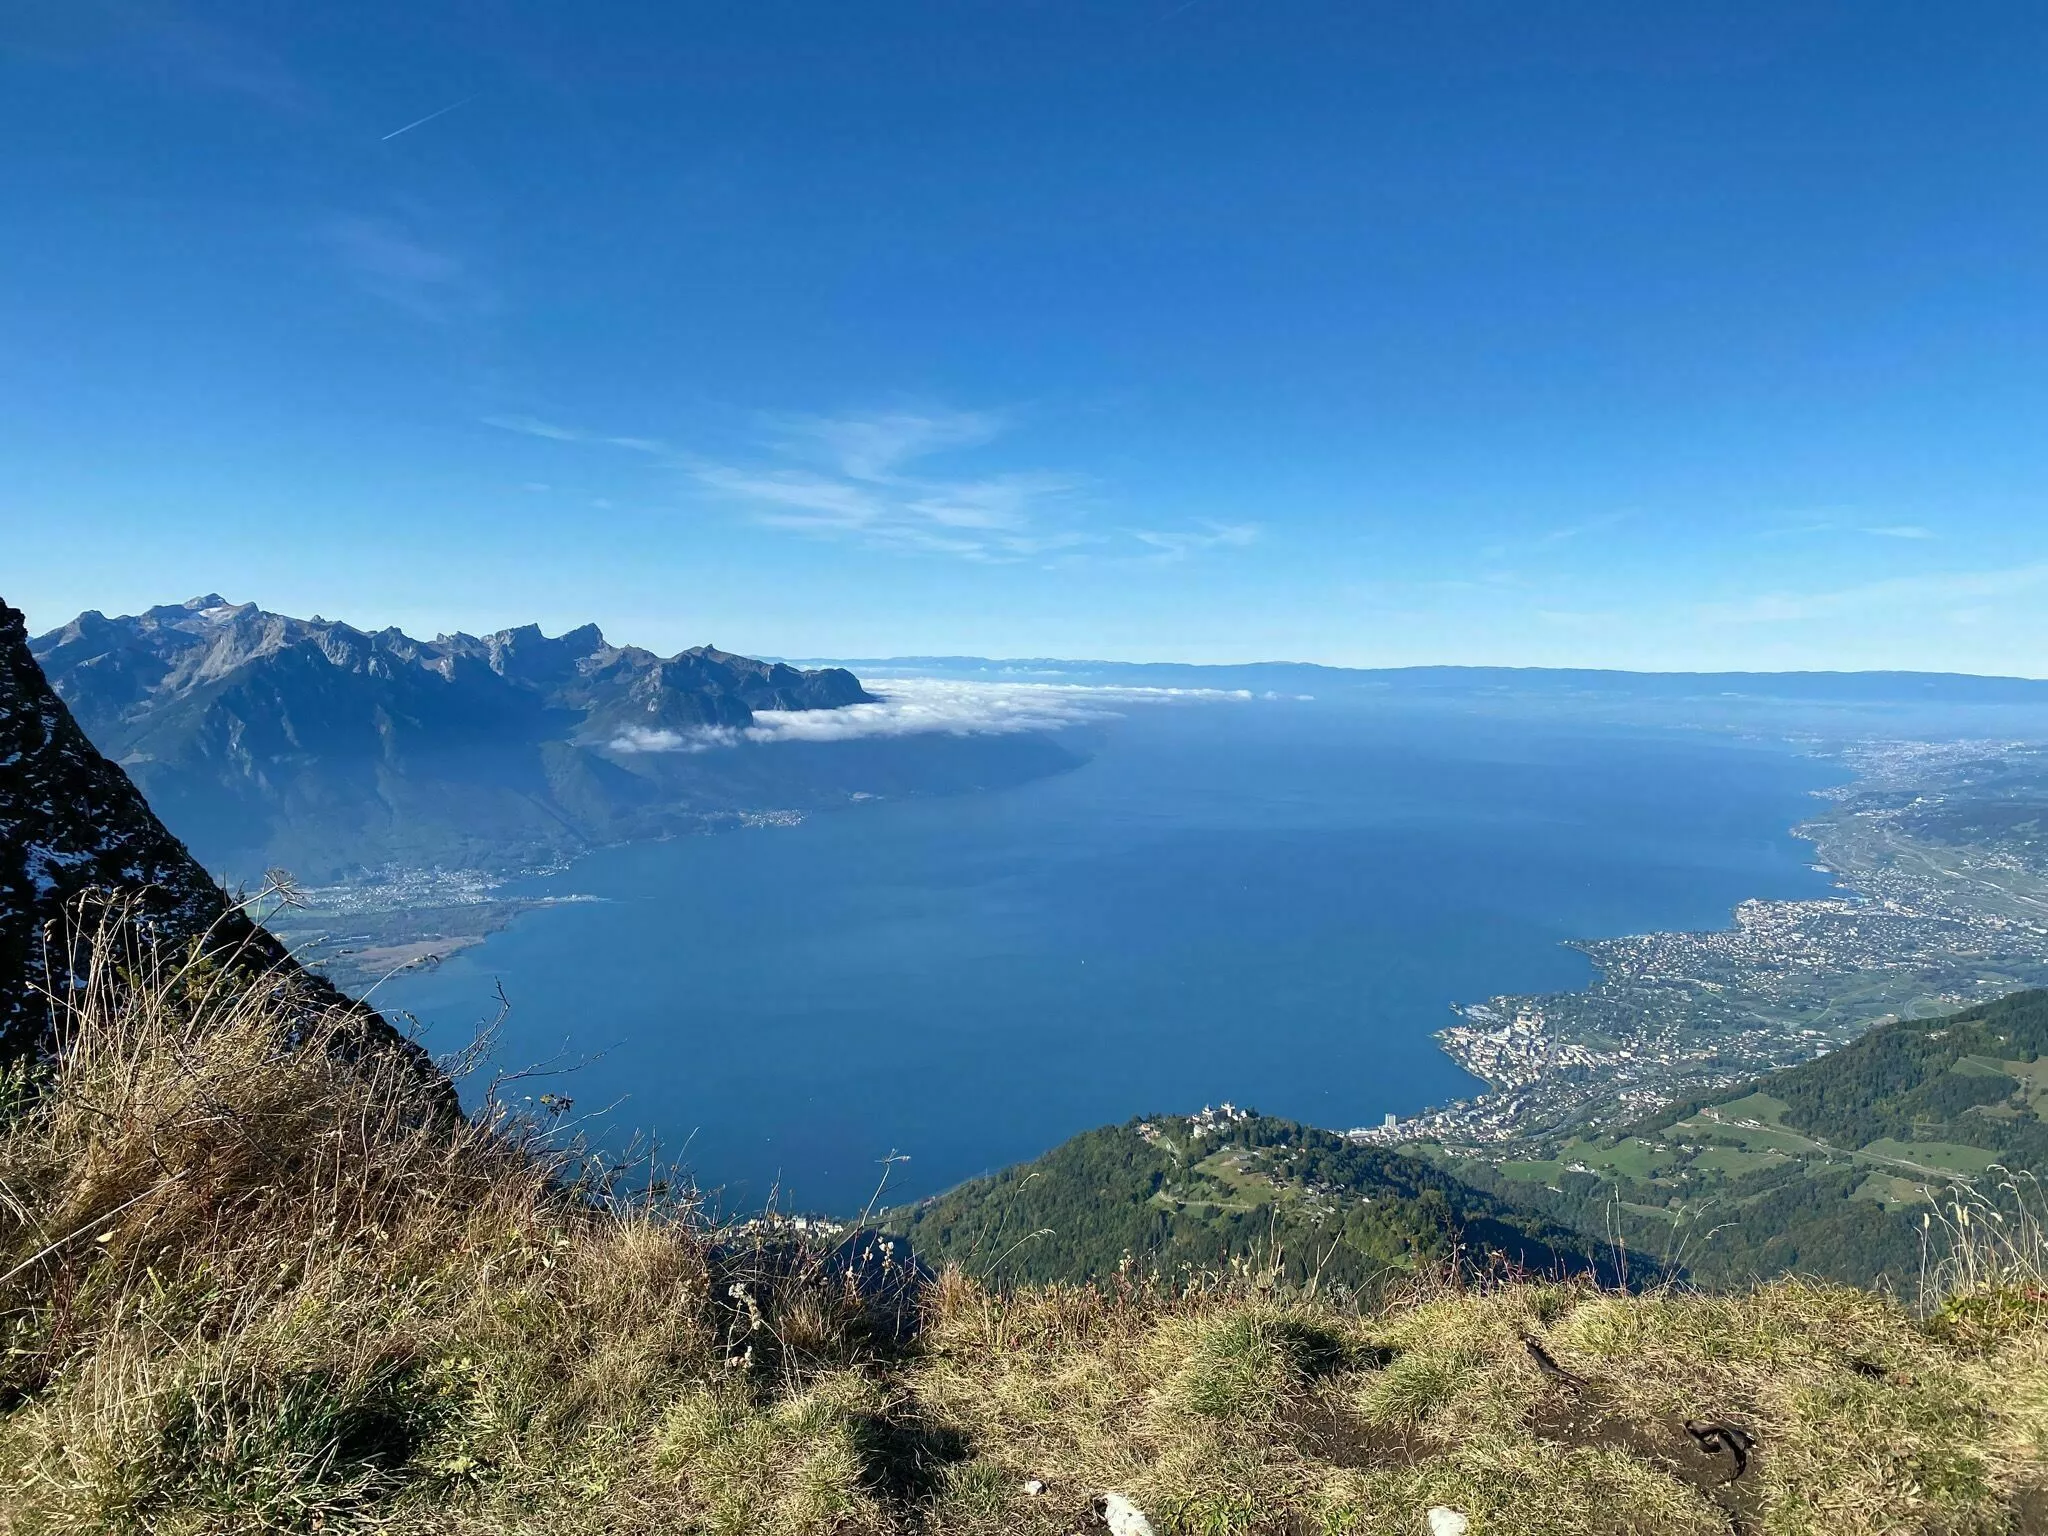 Caux - Sautodoz - Rochers de Naye in Switzerland, Europe | Trekking & Hiking - Rated 0.8